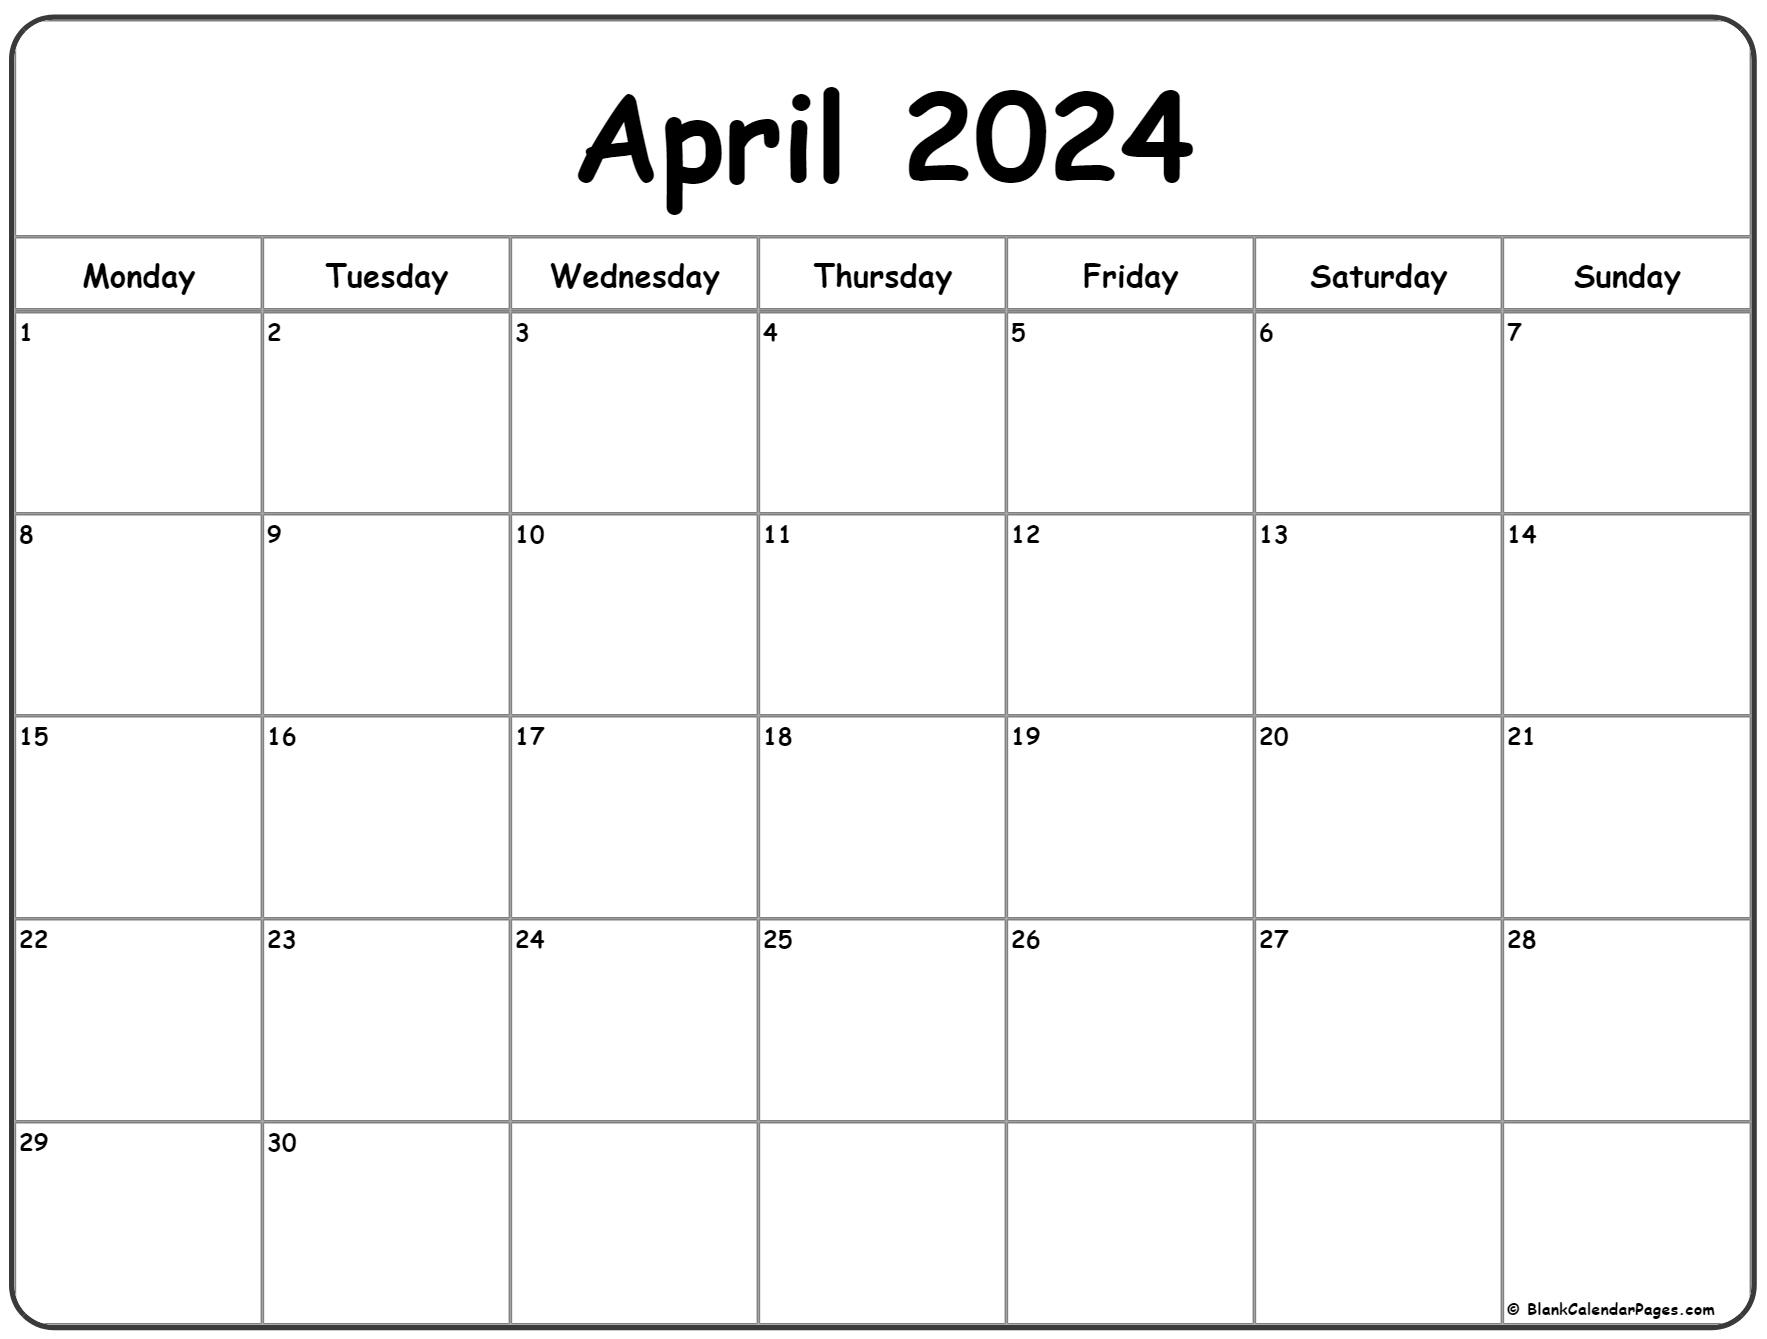 April 2024 Monday Calendar | Monday To Sunday for Blank Monthly Calendar Printable April 2024